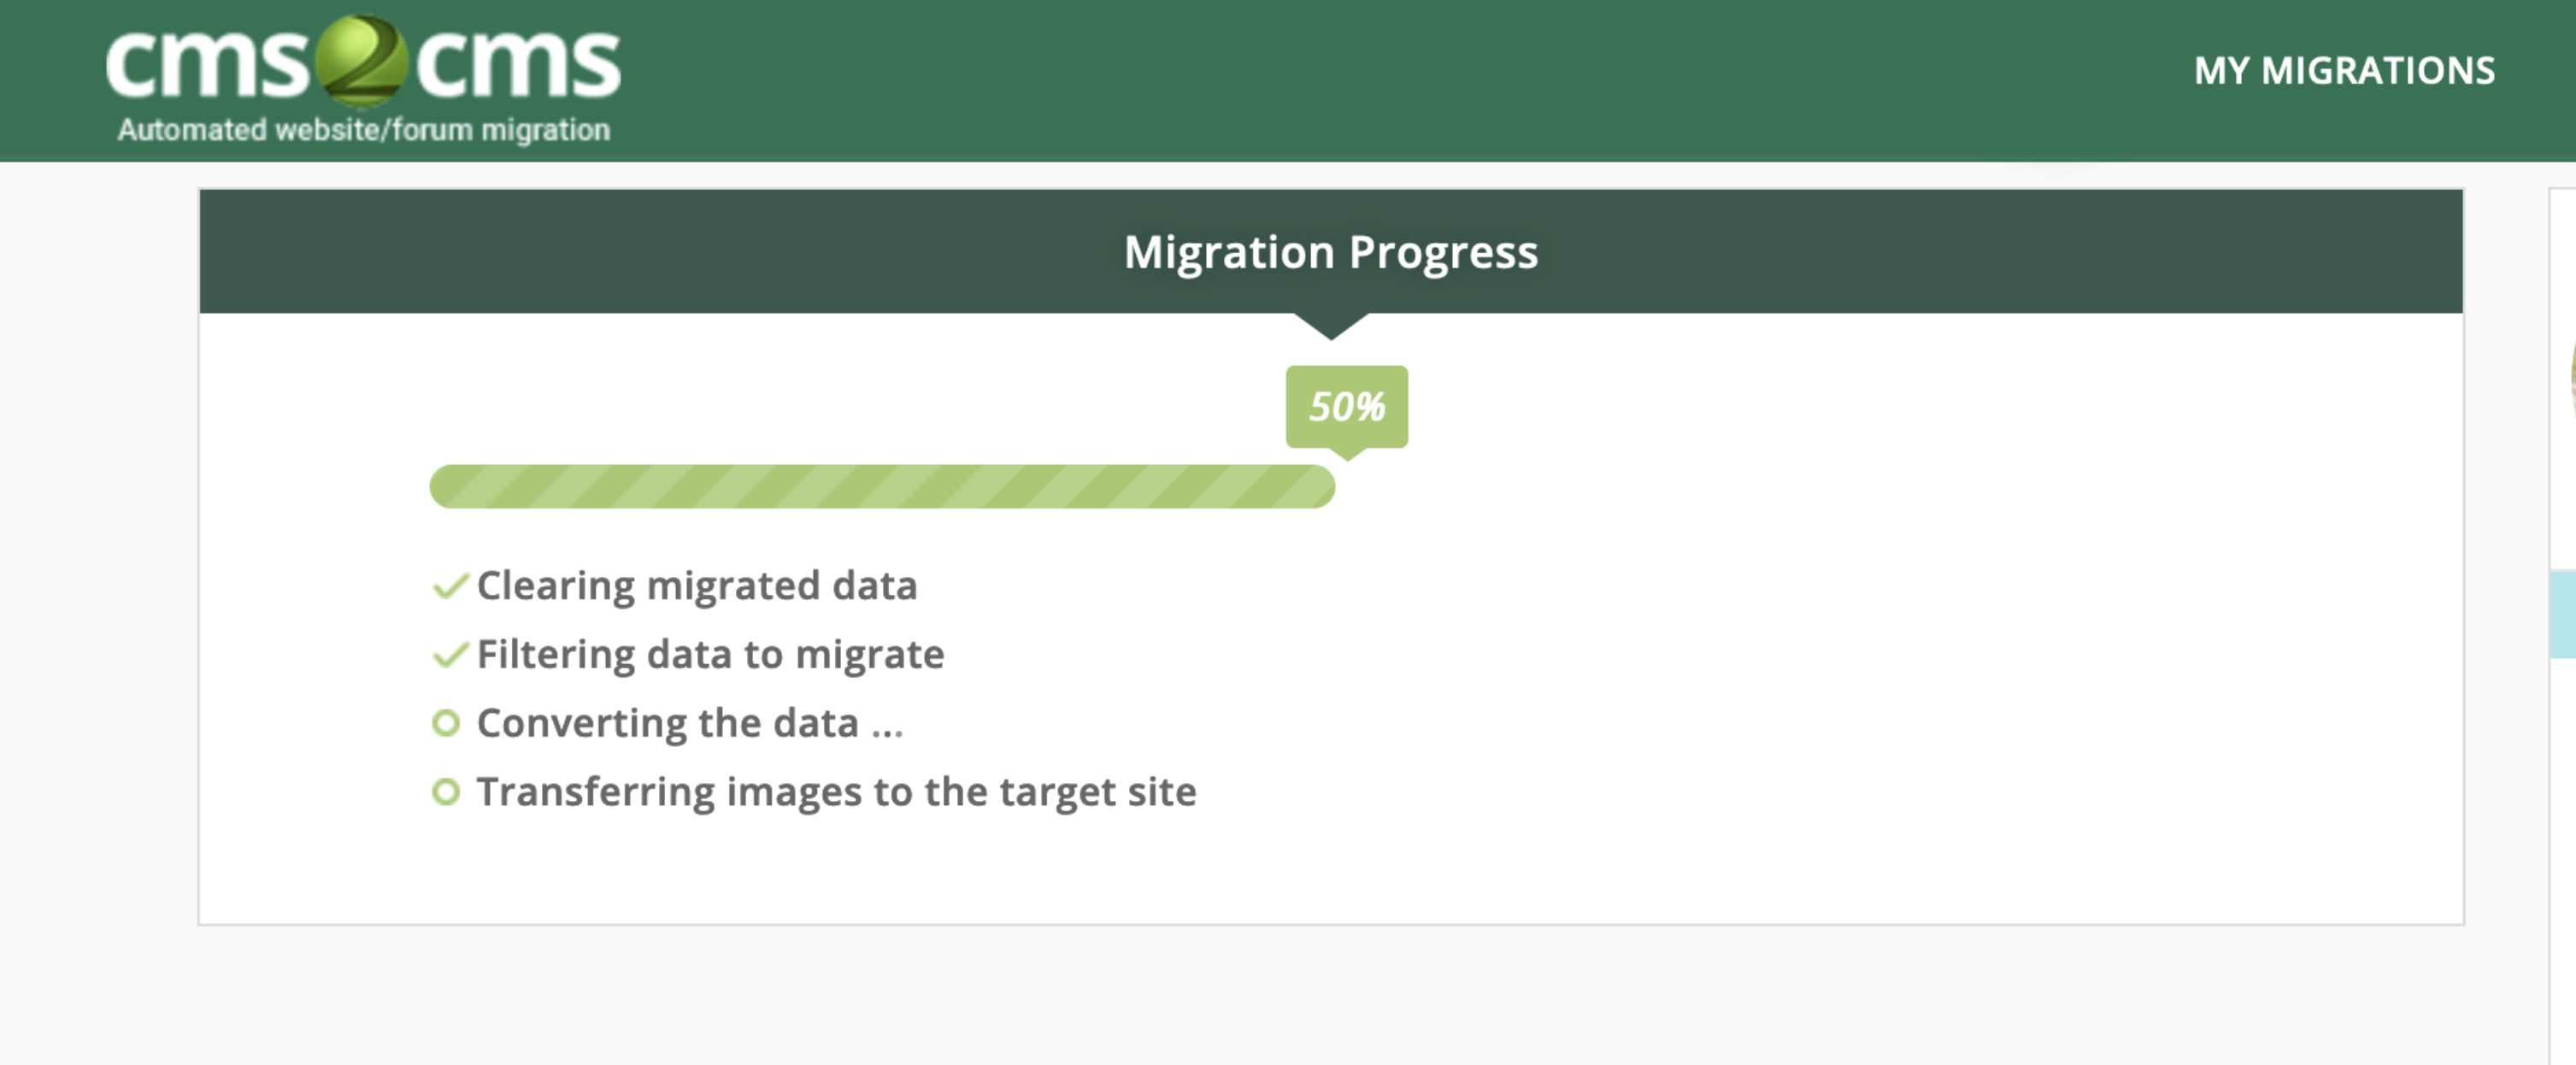 Show Migration Progress